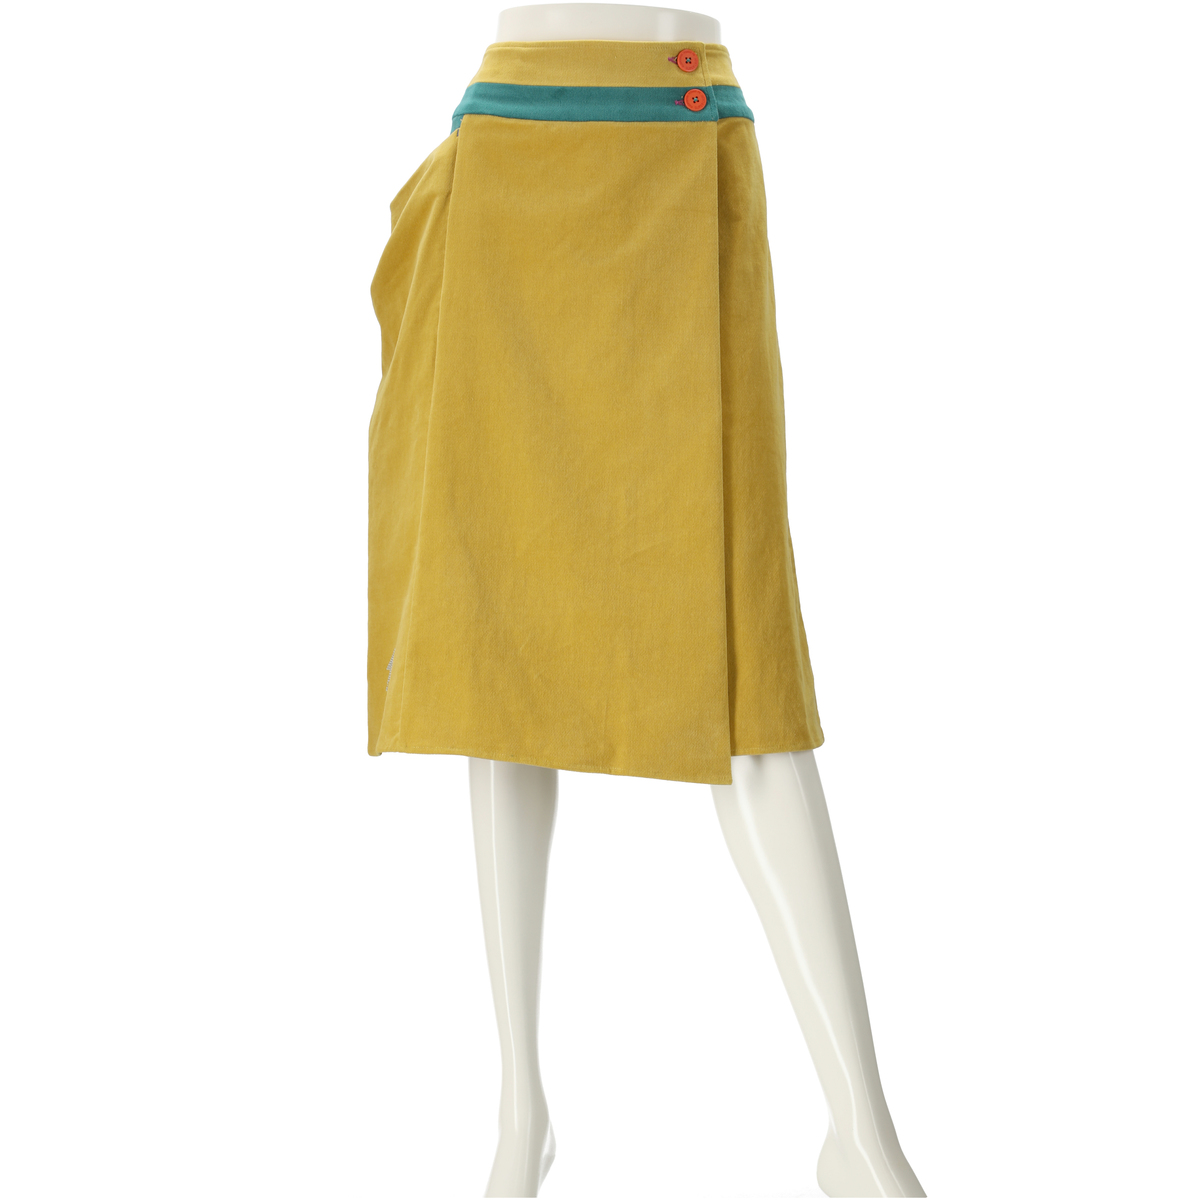 SUPERLADY ウエスト調整付き配色デザインラップスカート